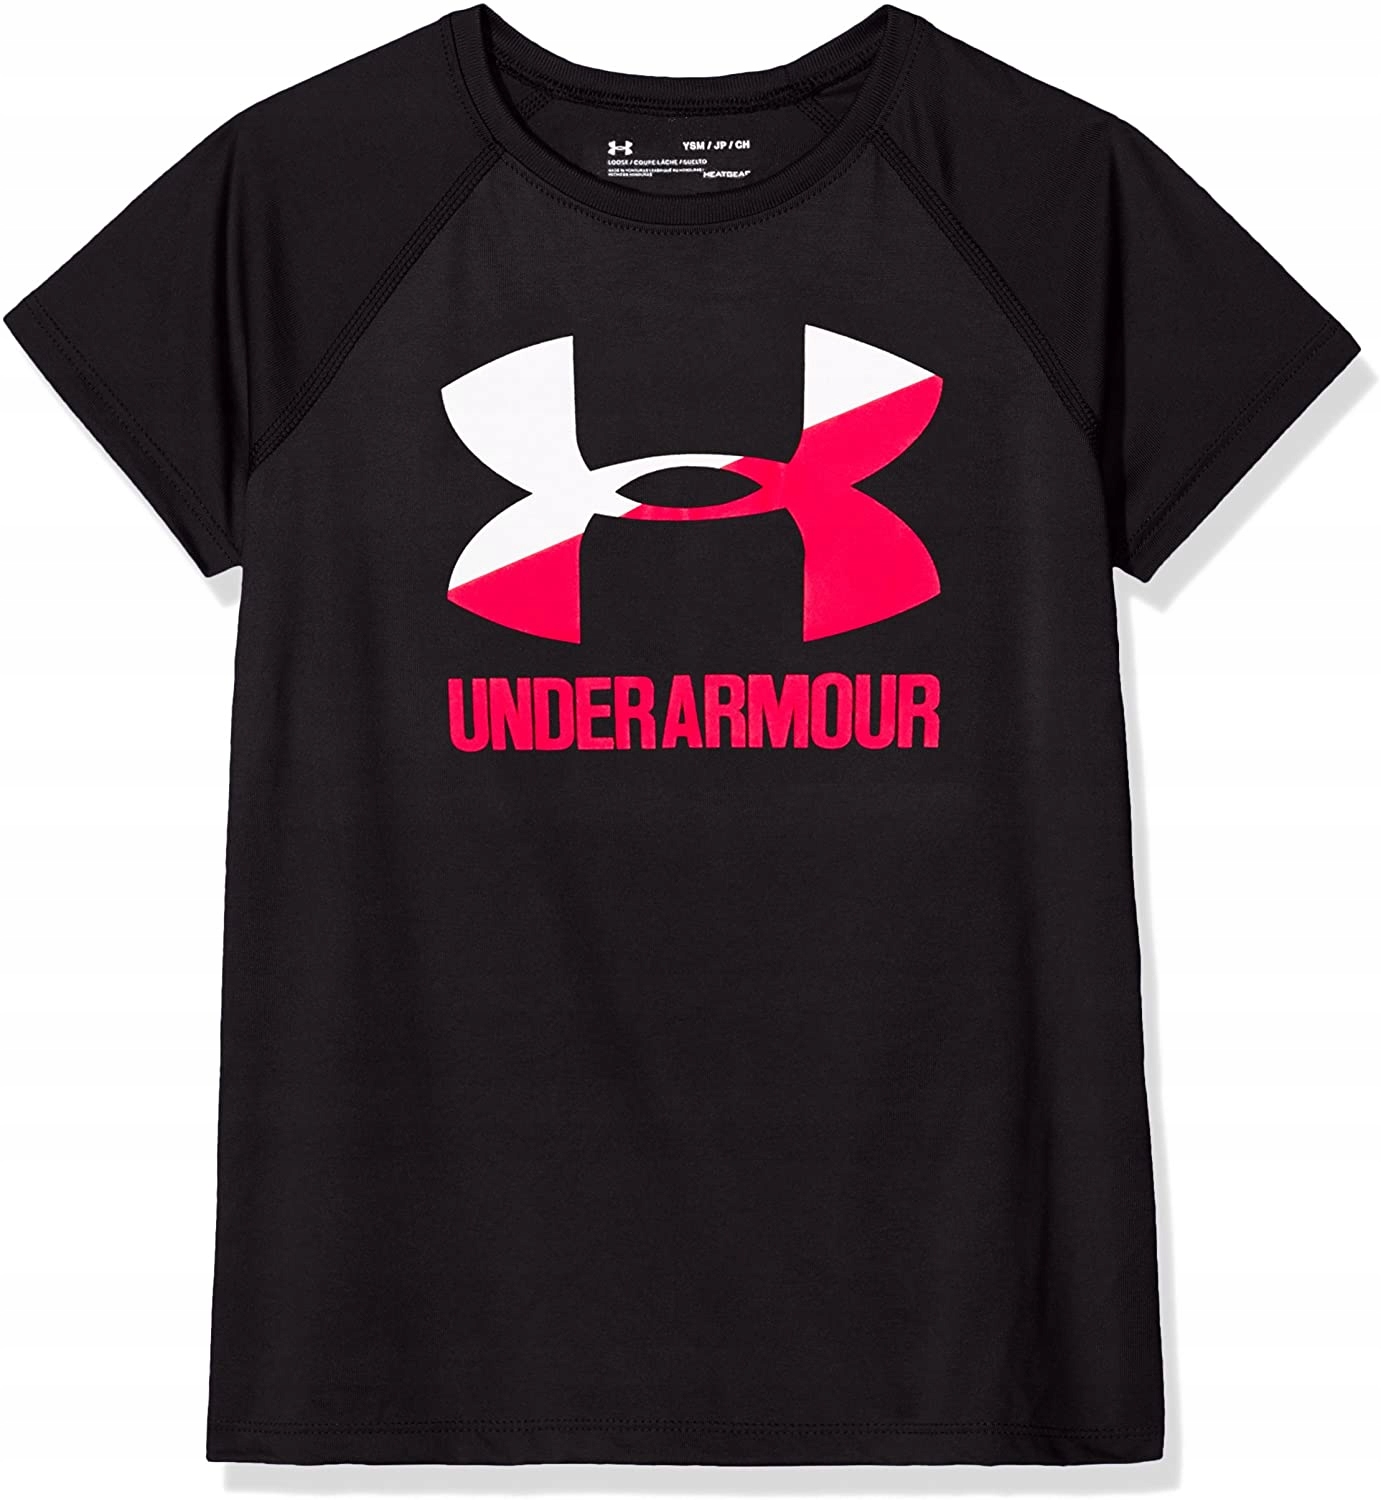 UNDER ARMOUR detské tričko logo 122-128 7-8l